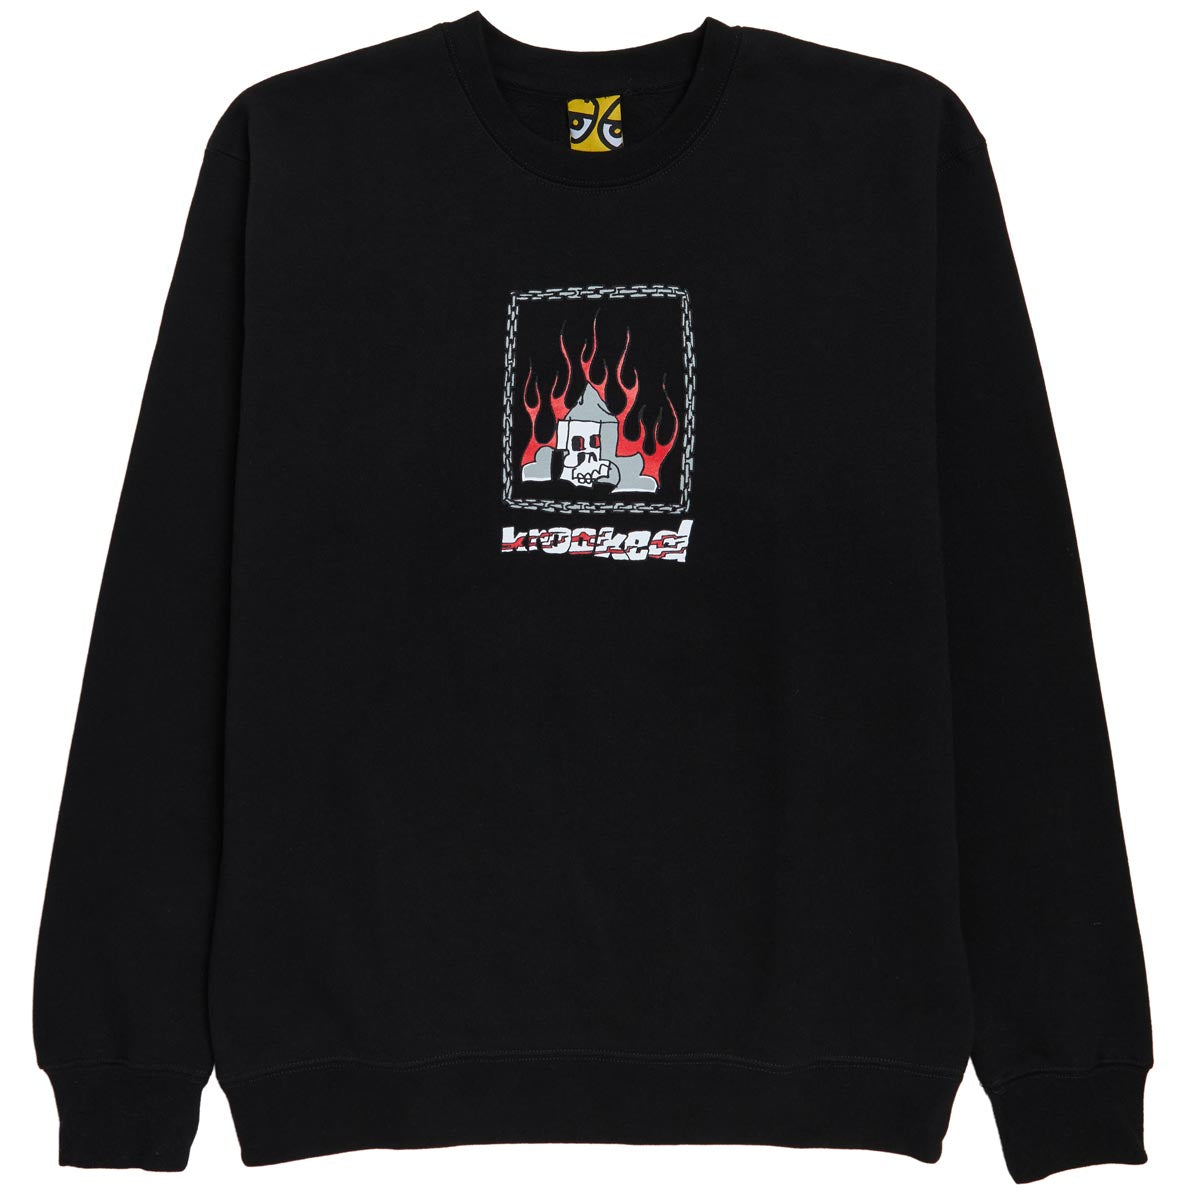 Krooked Chain Frame Sweatshirt - Black image 1